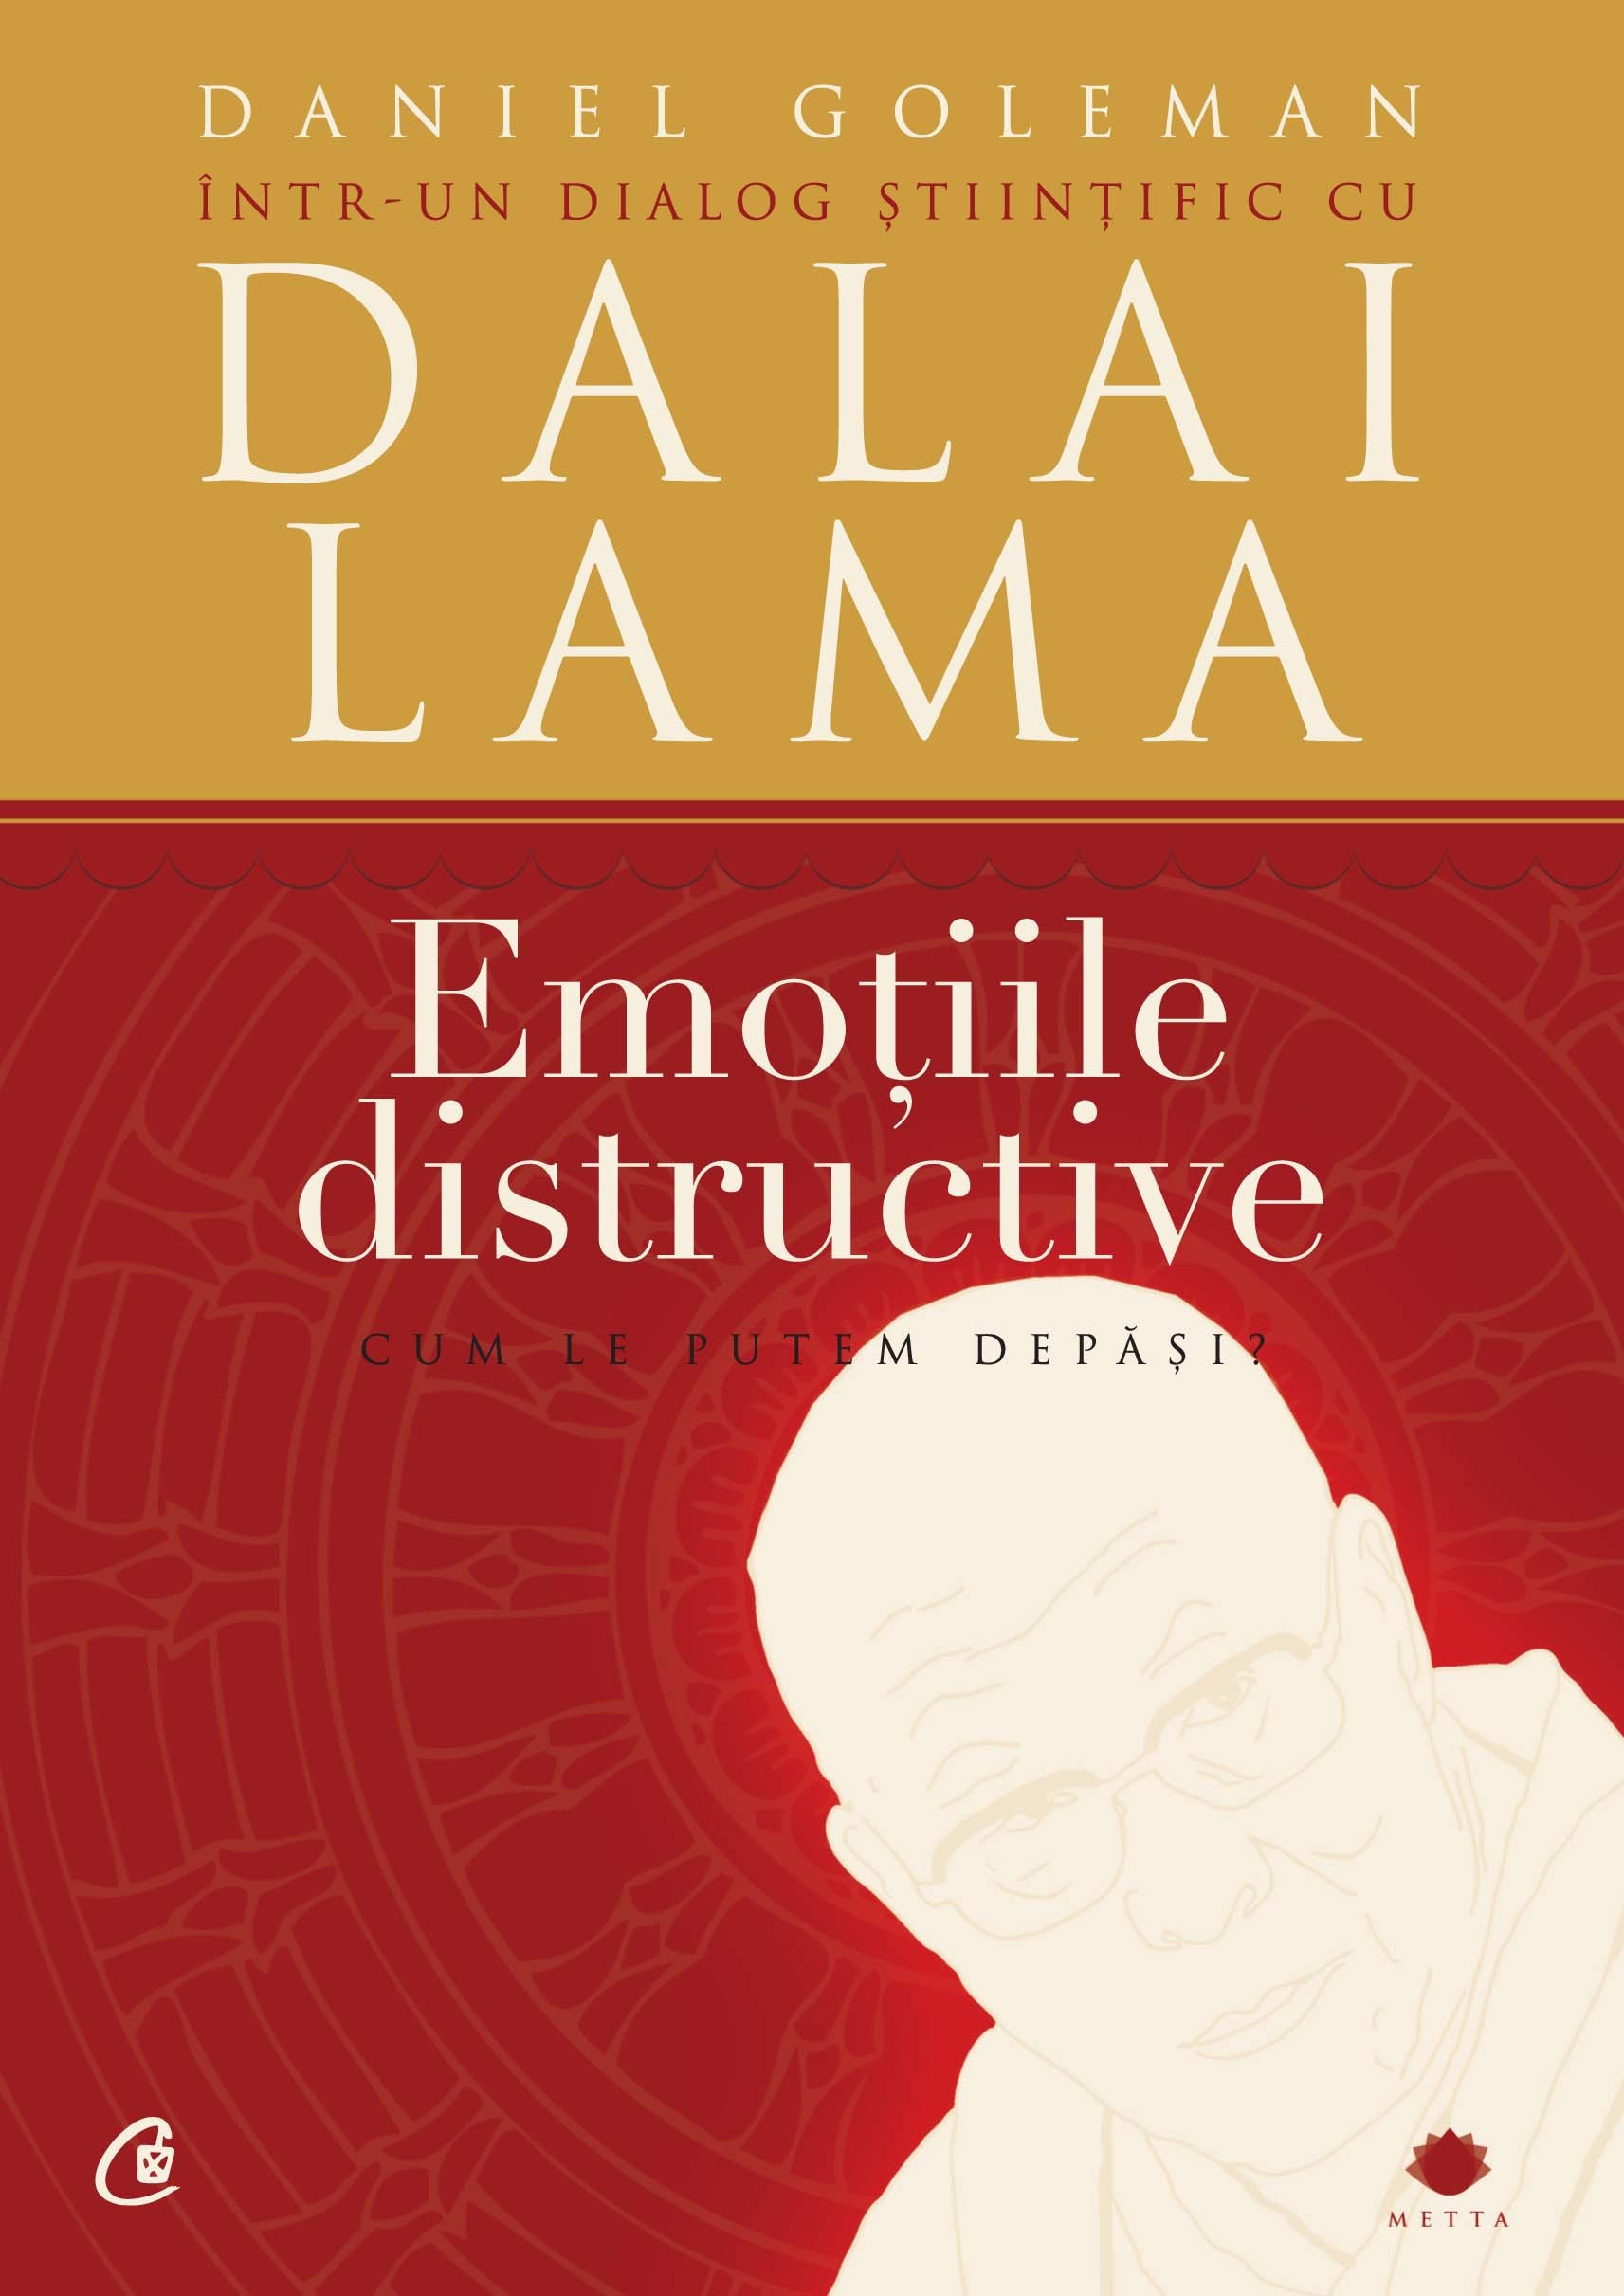 Emotiile distructive - Daniel Goleman